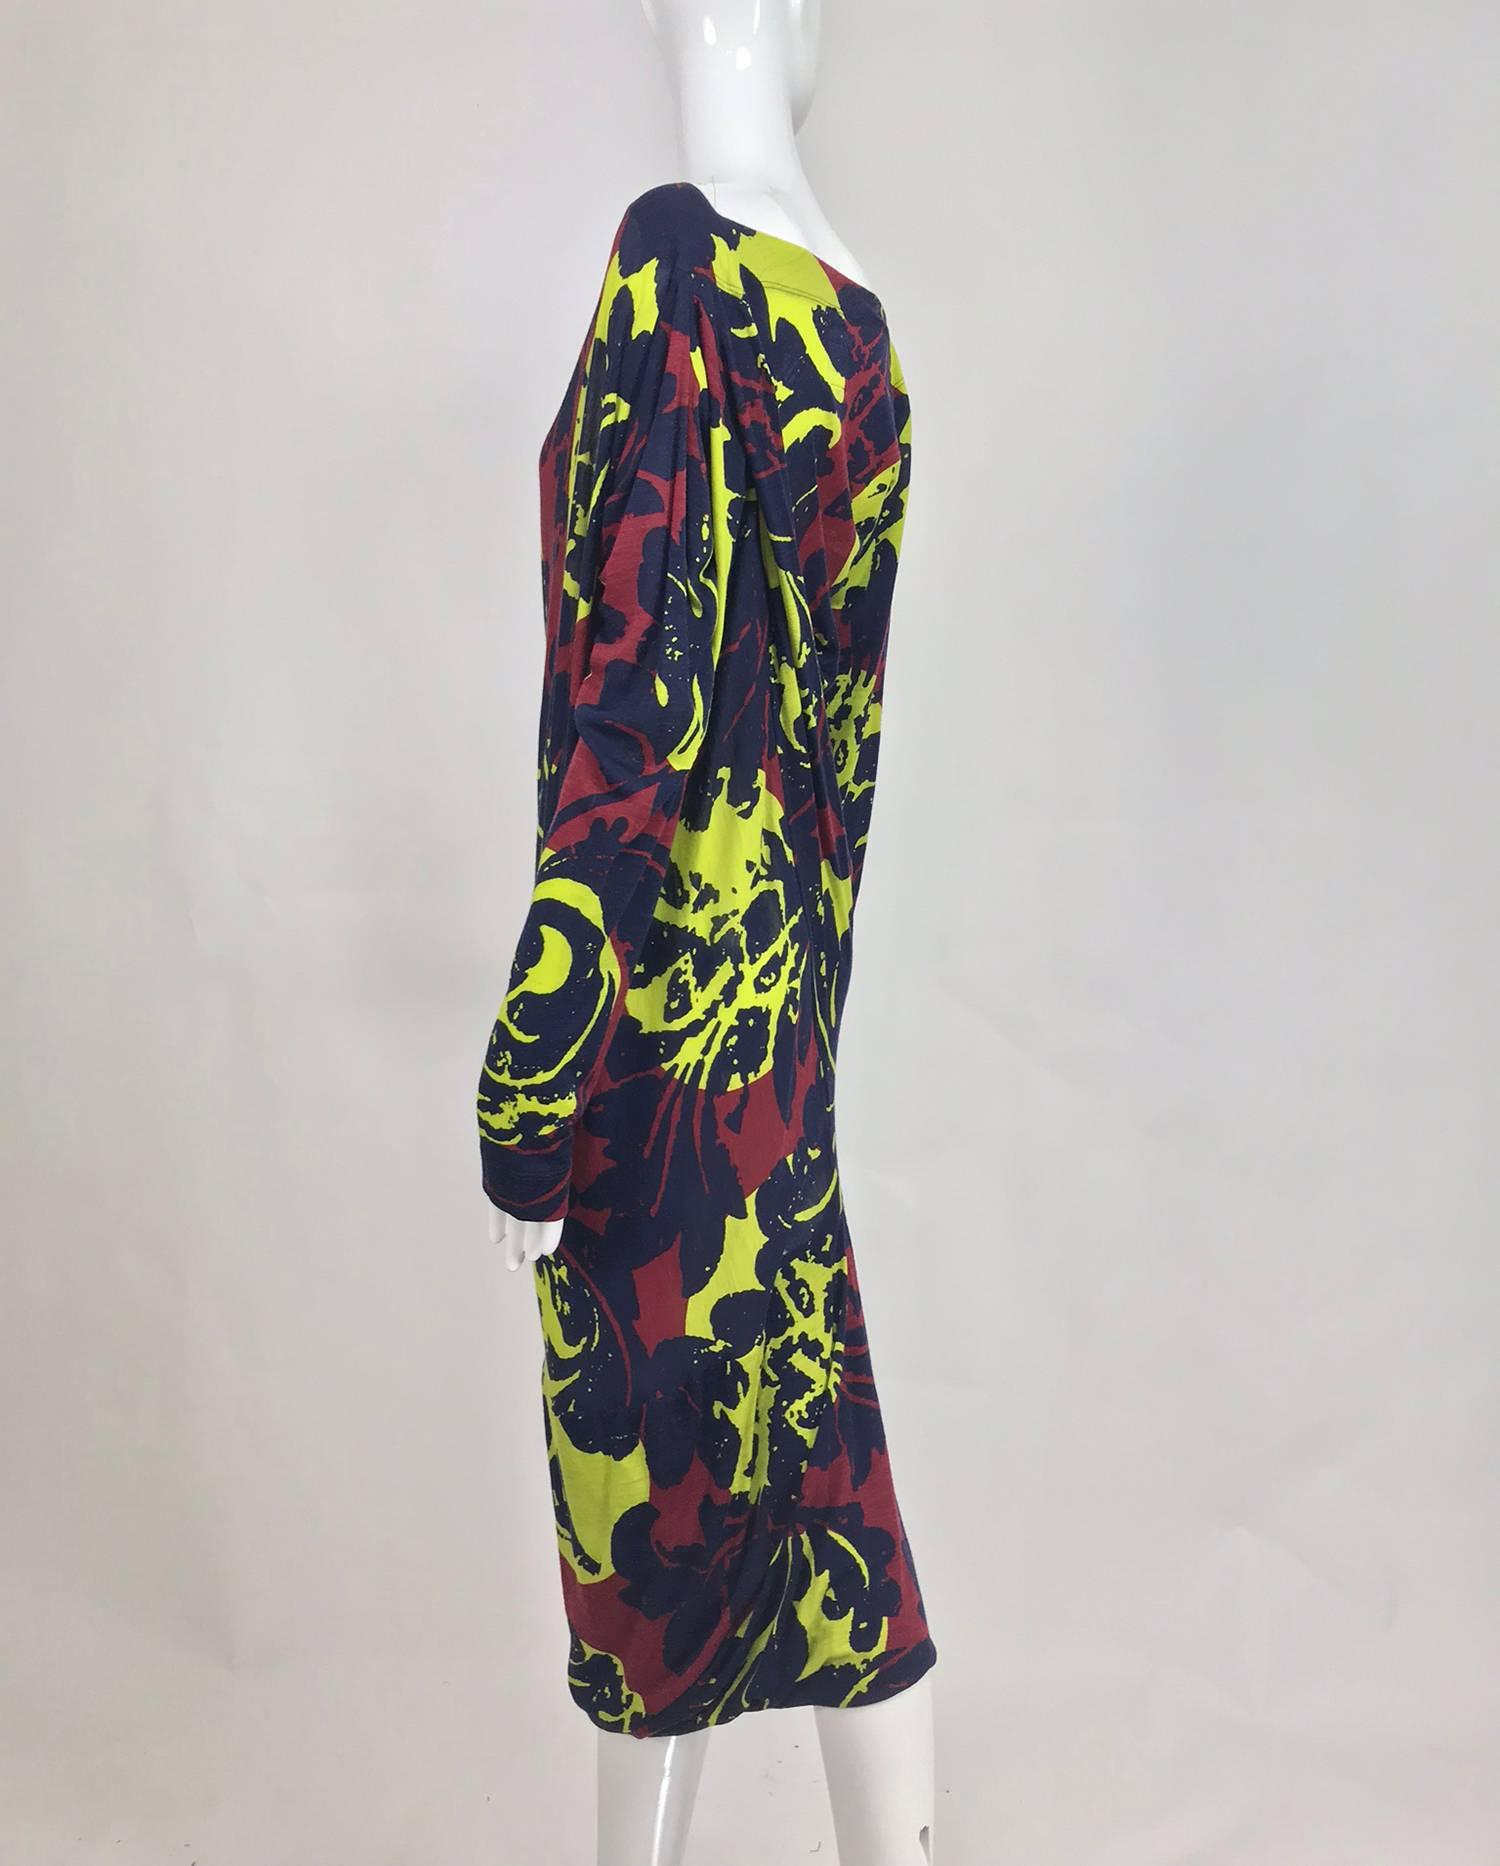 Women's Vivienne Westwood Anglomania asymetrical print knit jersey dress